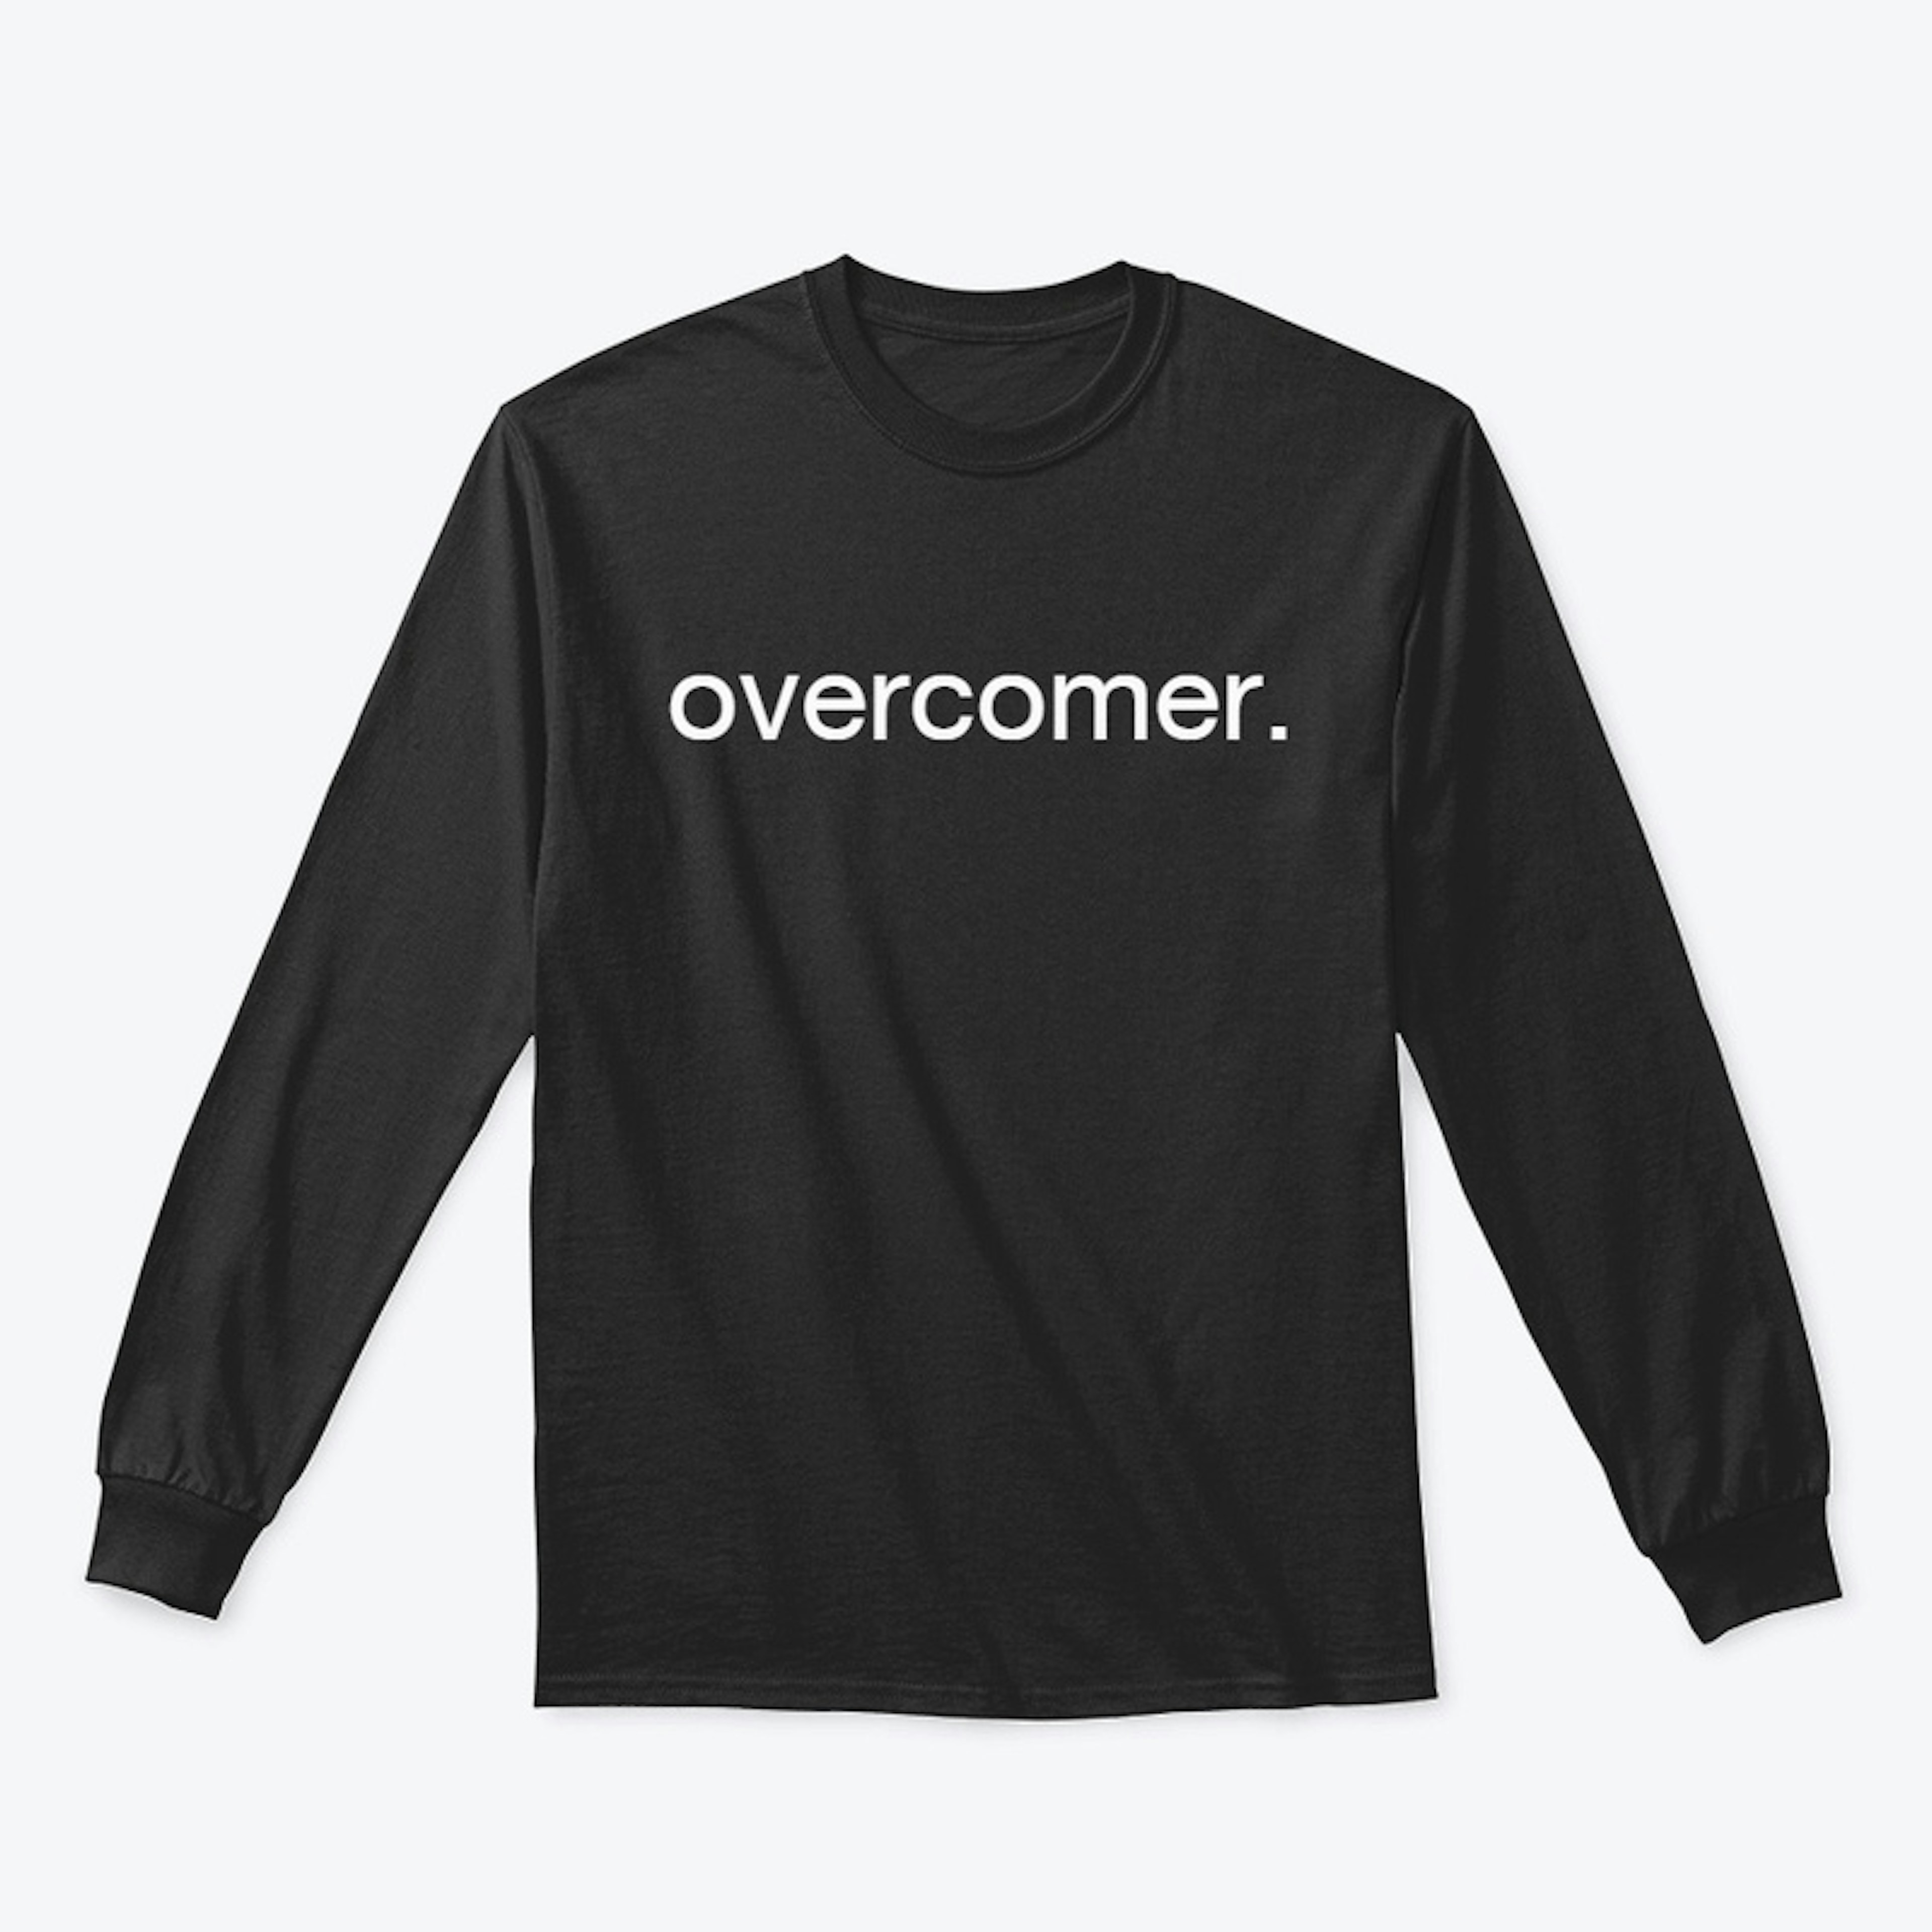 Overcomer 